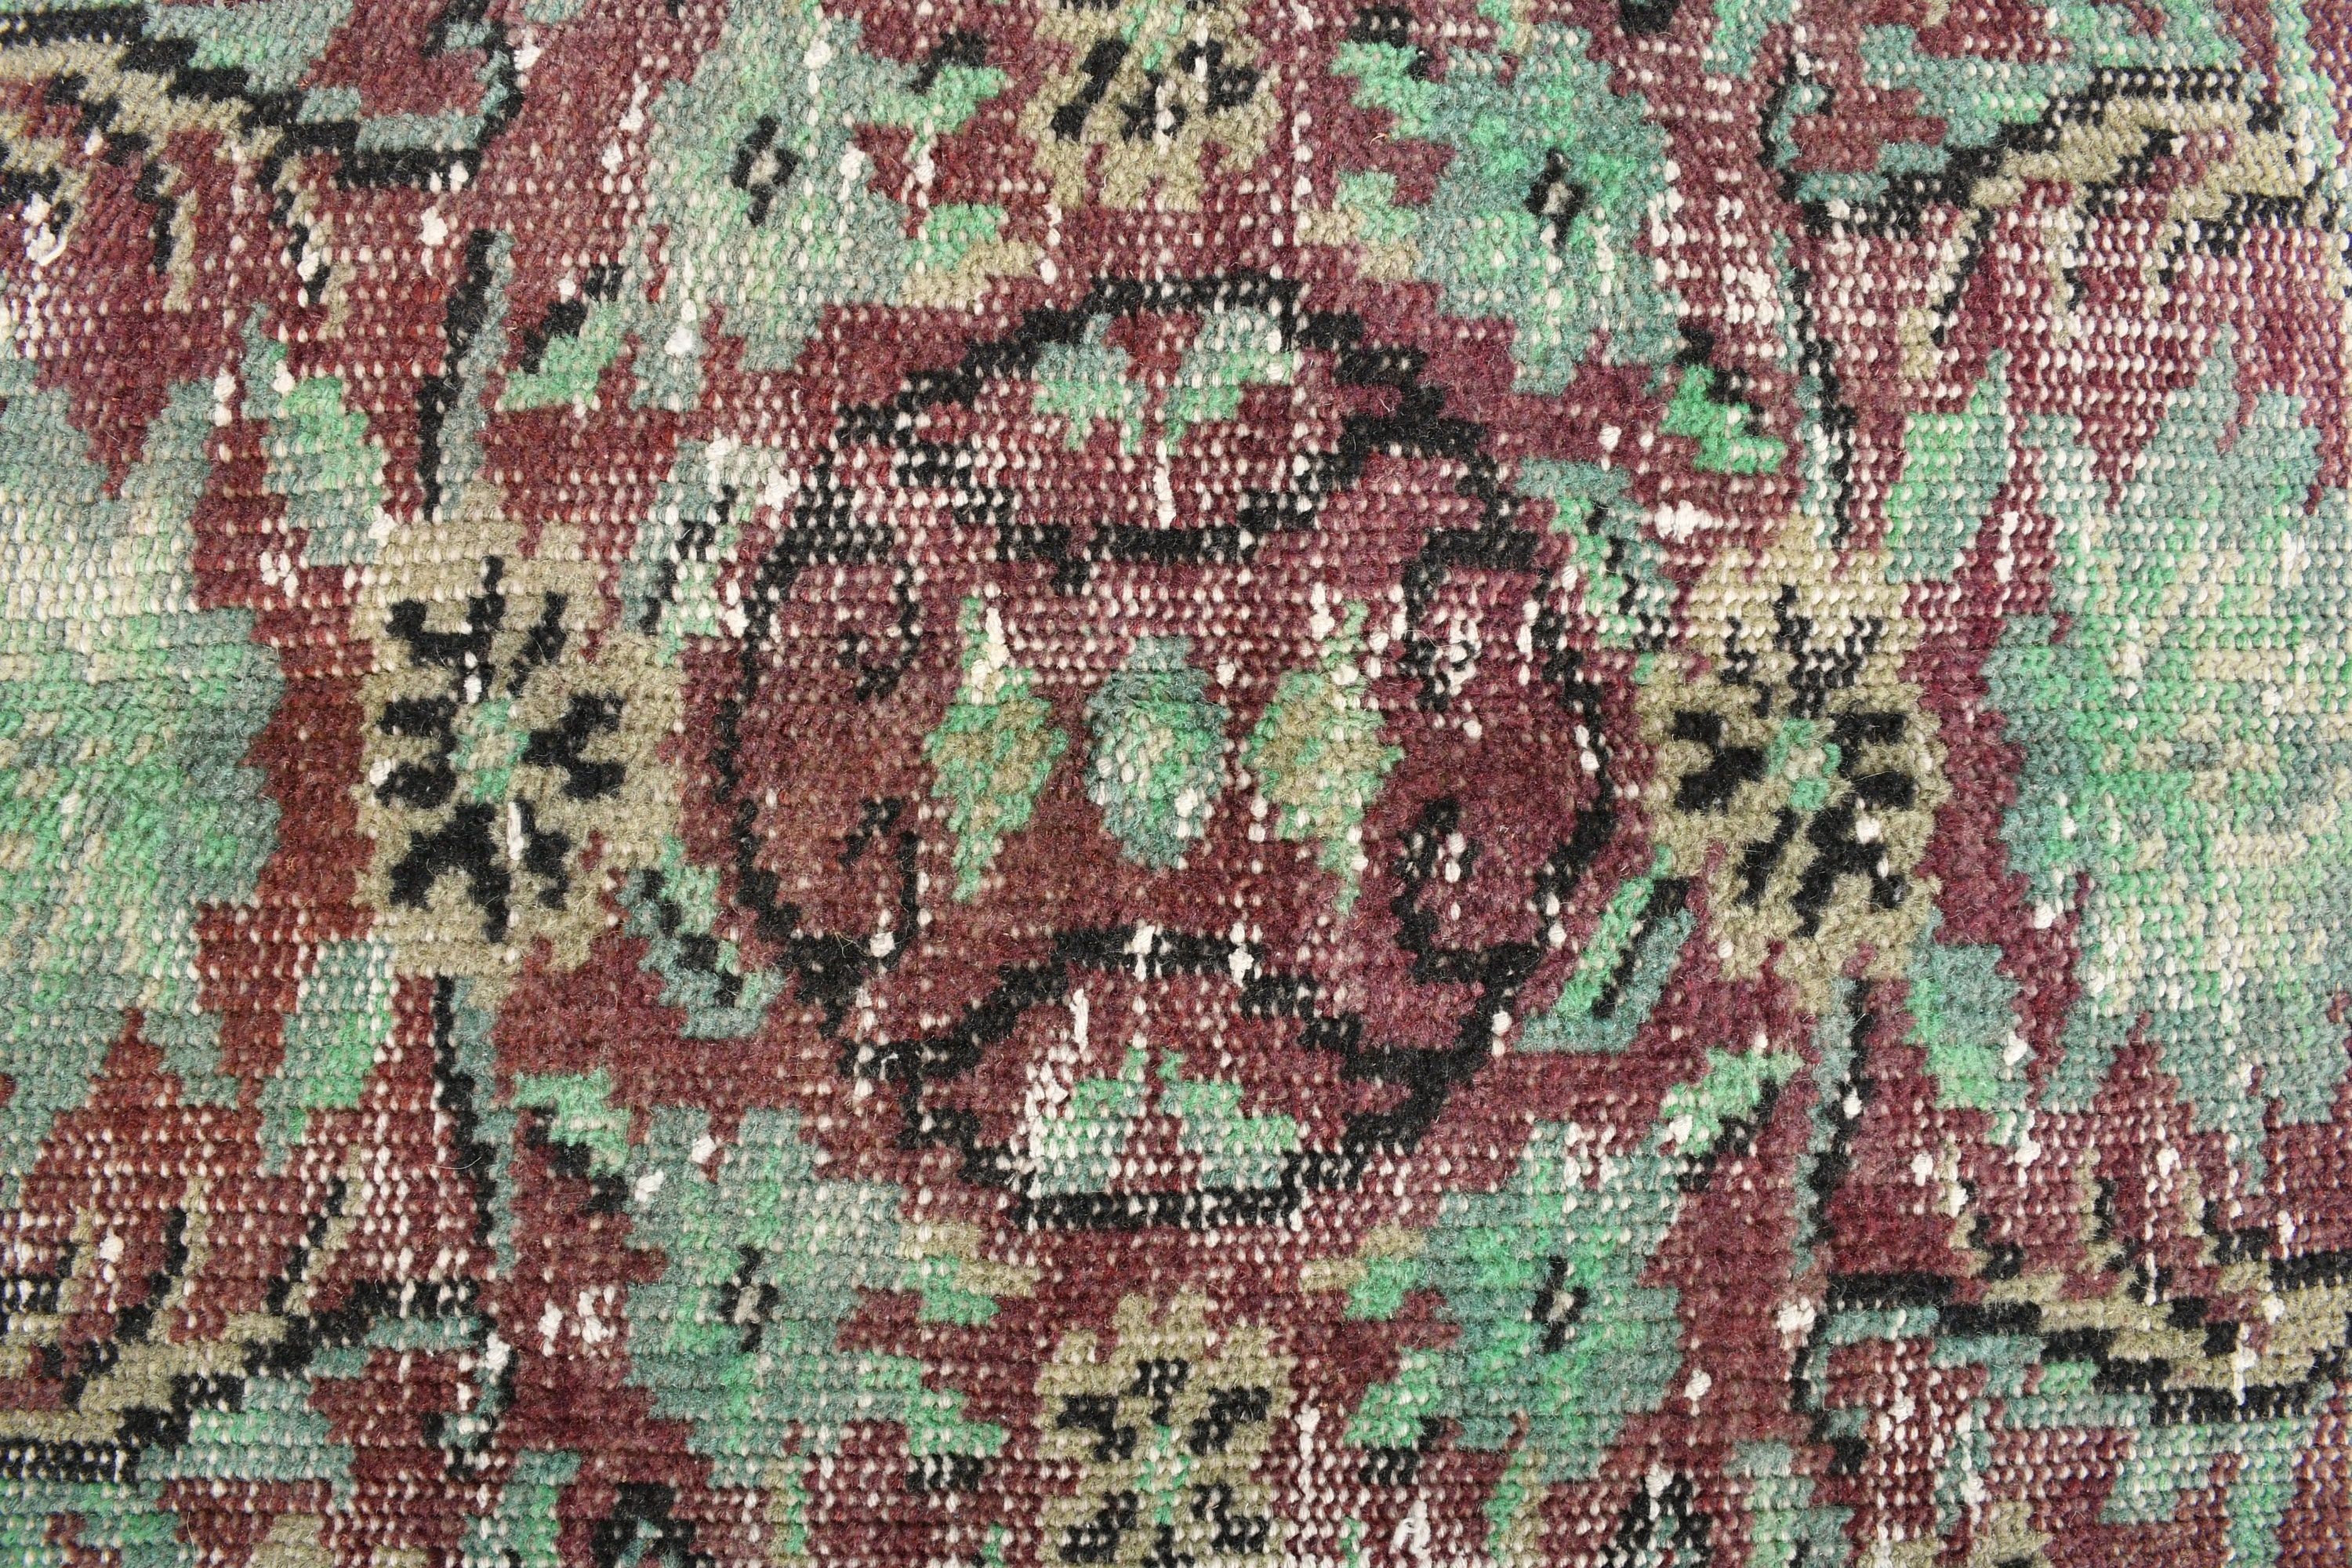 Vintage Rug, Rugs for Living Room, Turkish Rug, Salon Rug, 5.4x8.3 ft Large Rugs, Moroccan Rugs, Green Antique Rug, Art Rugs, Bedroom Rugs